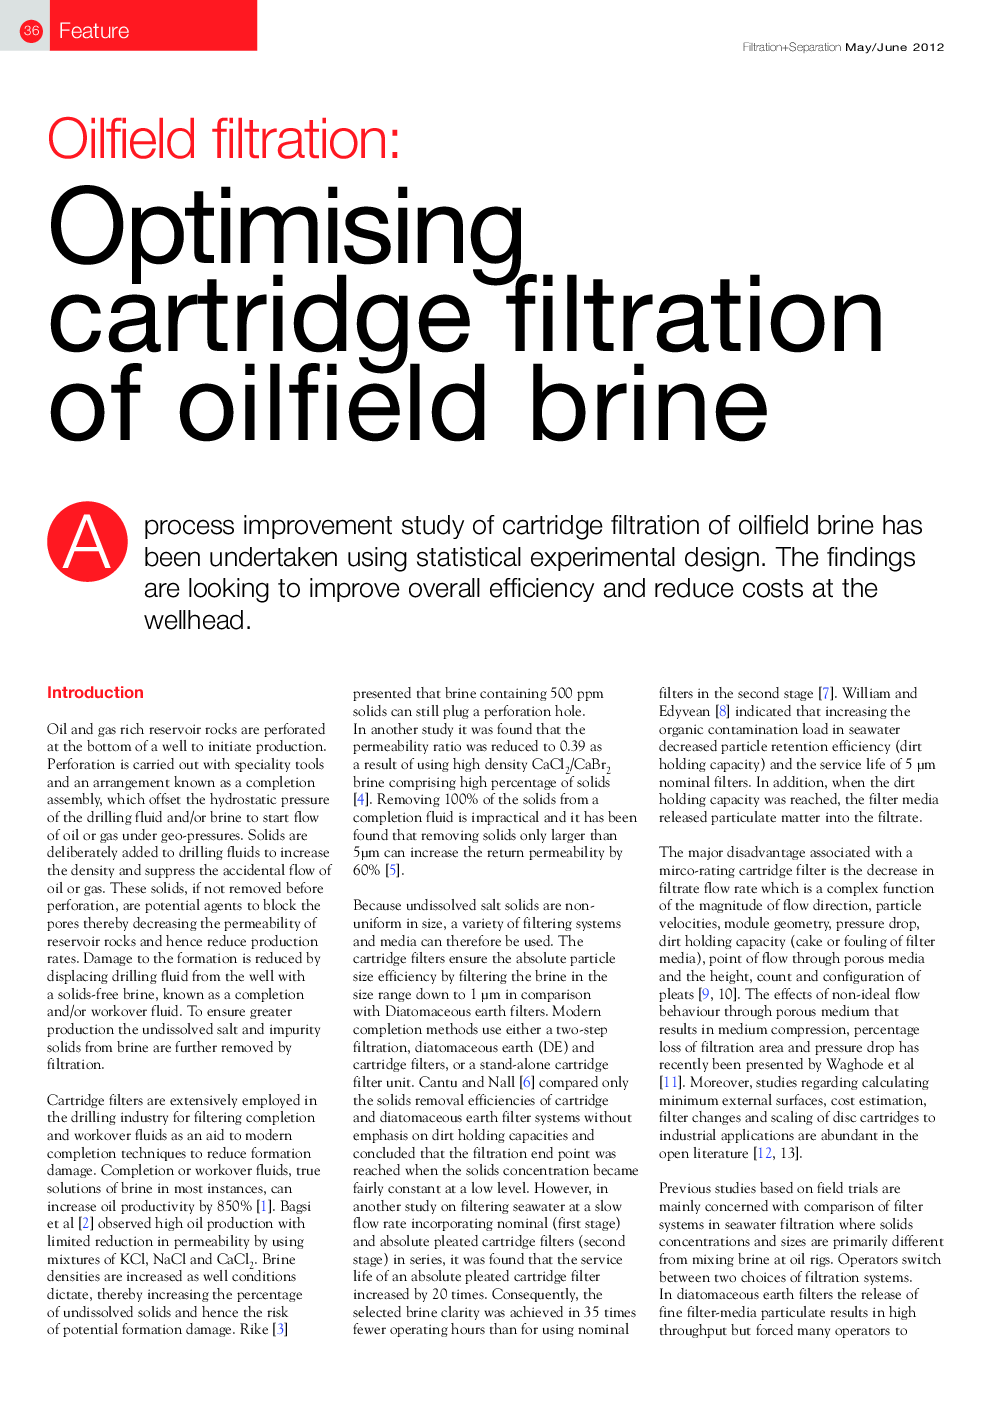 Oilfield filtration: Optimising cartridge filtration of oilfield brine